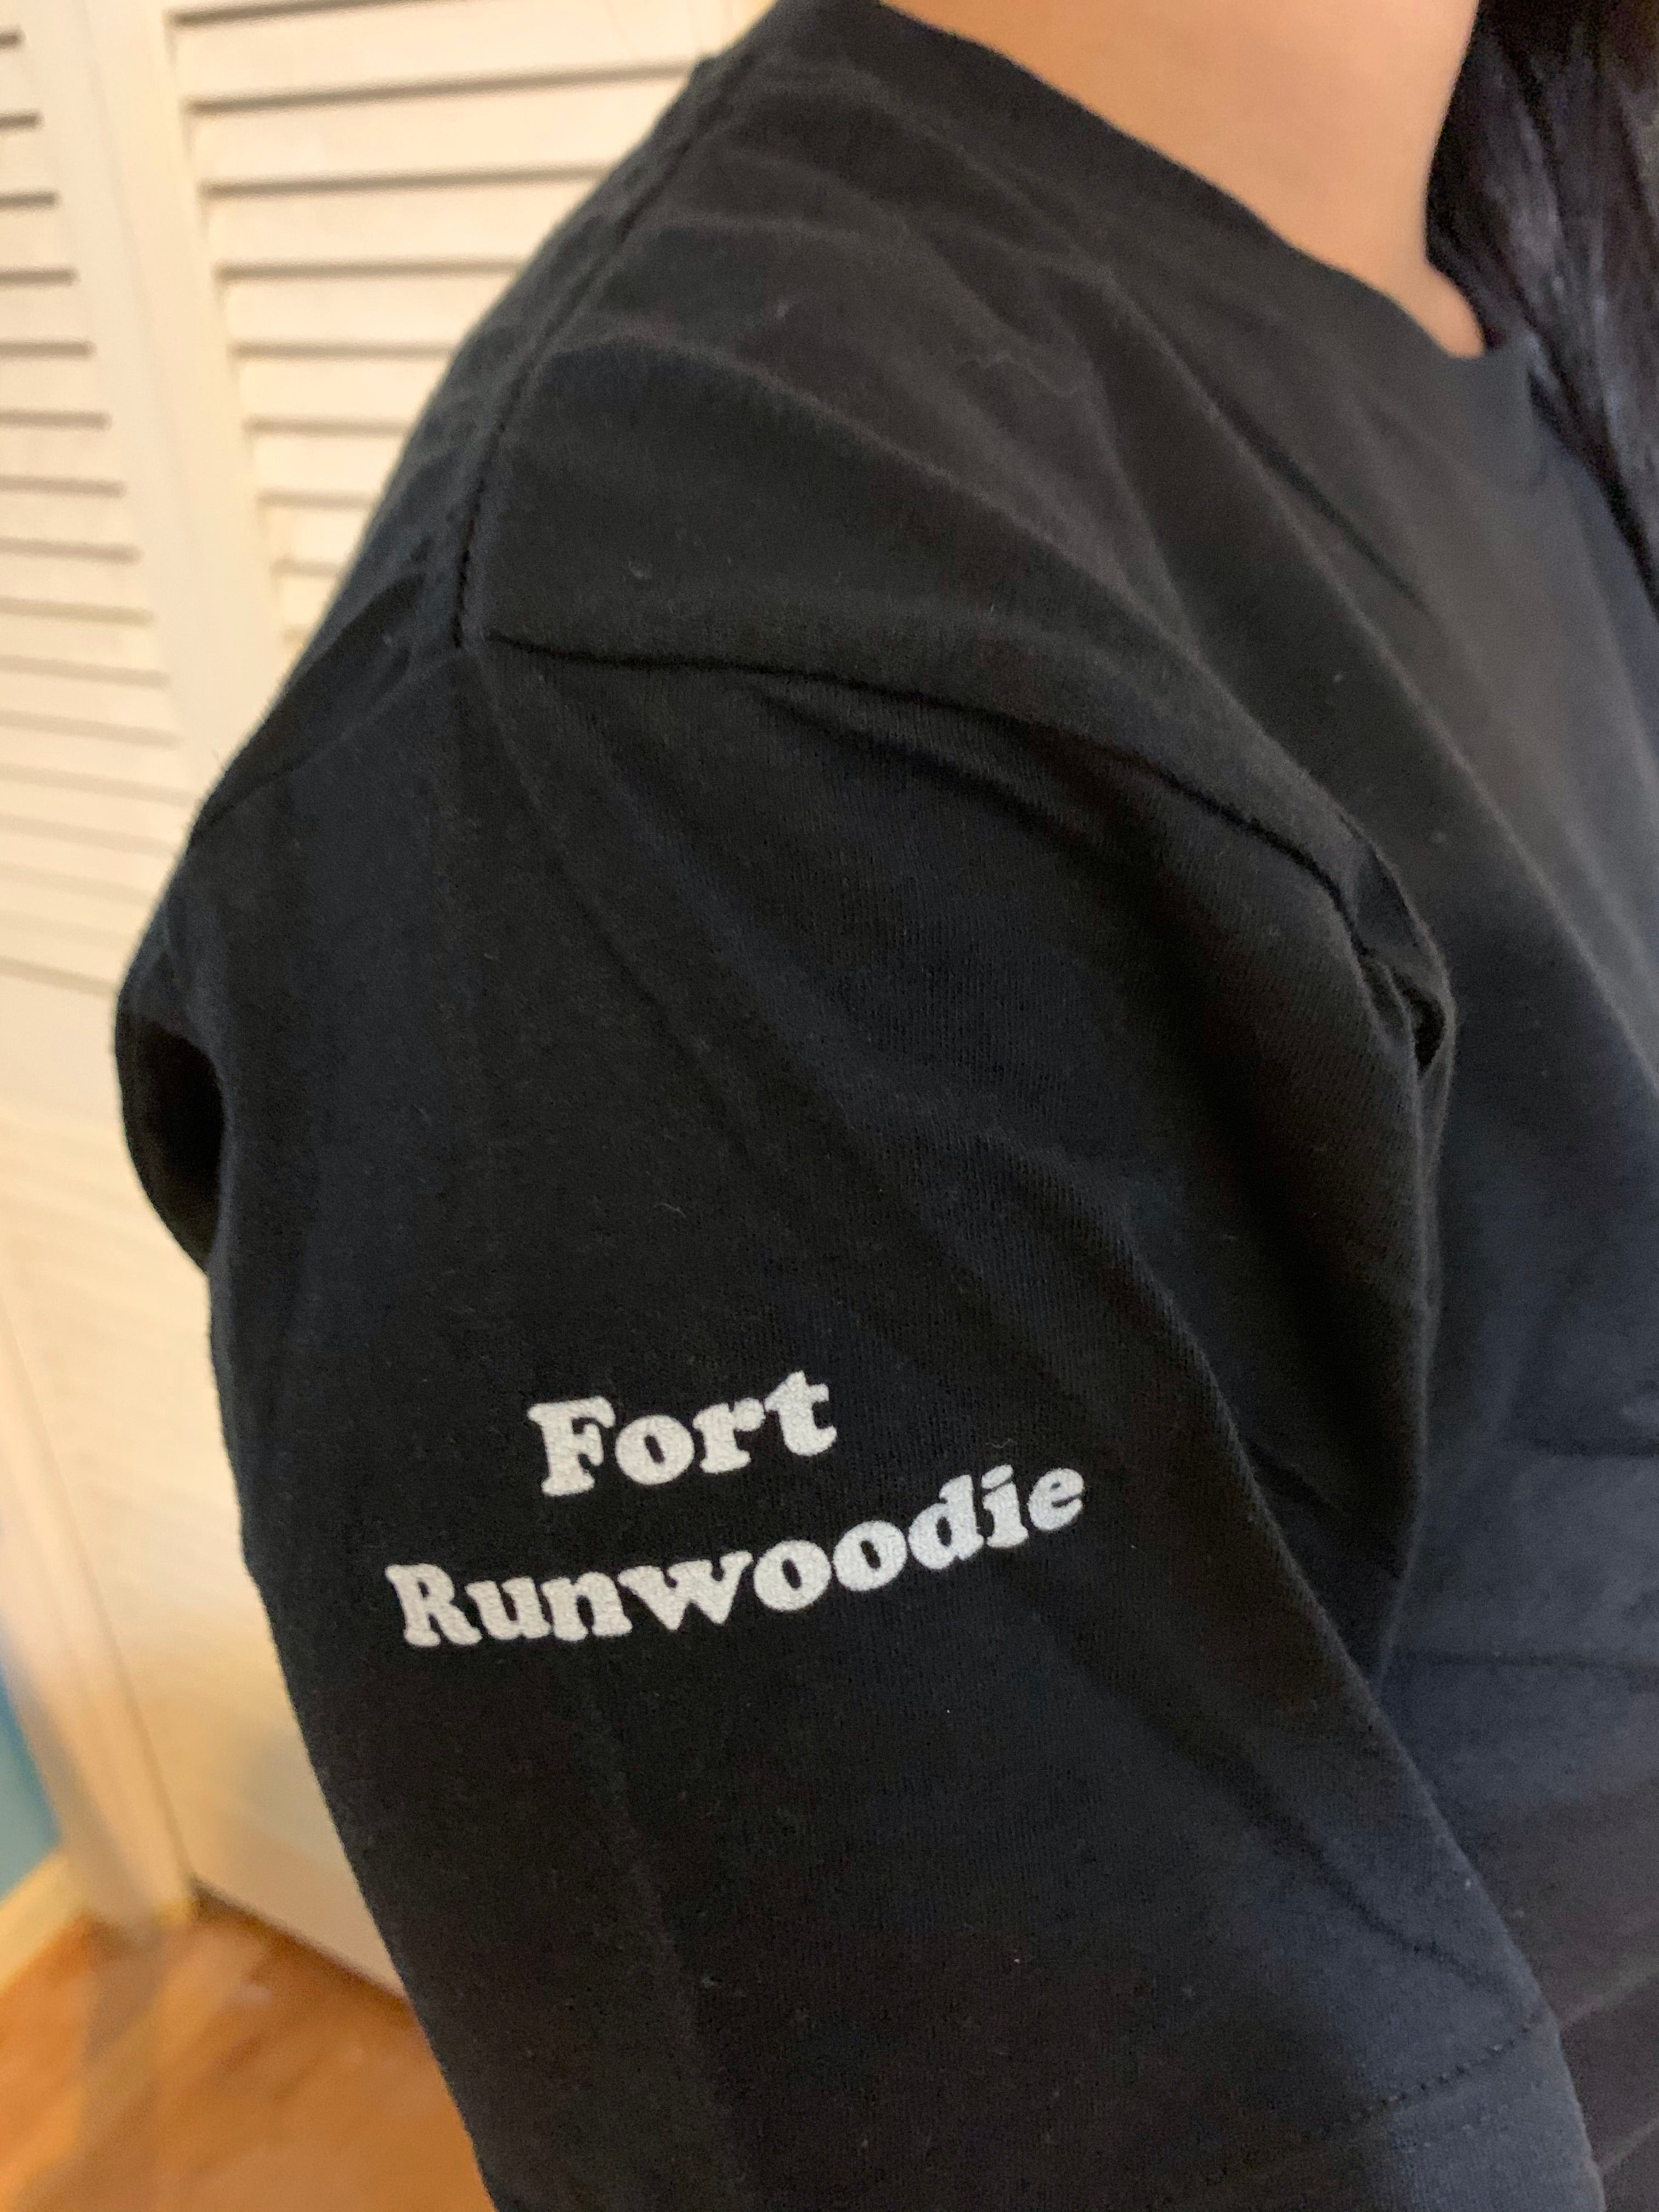 Fort Runwoodie Right Sleeve T-Shirt